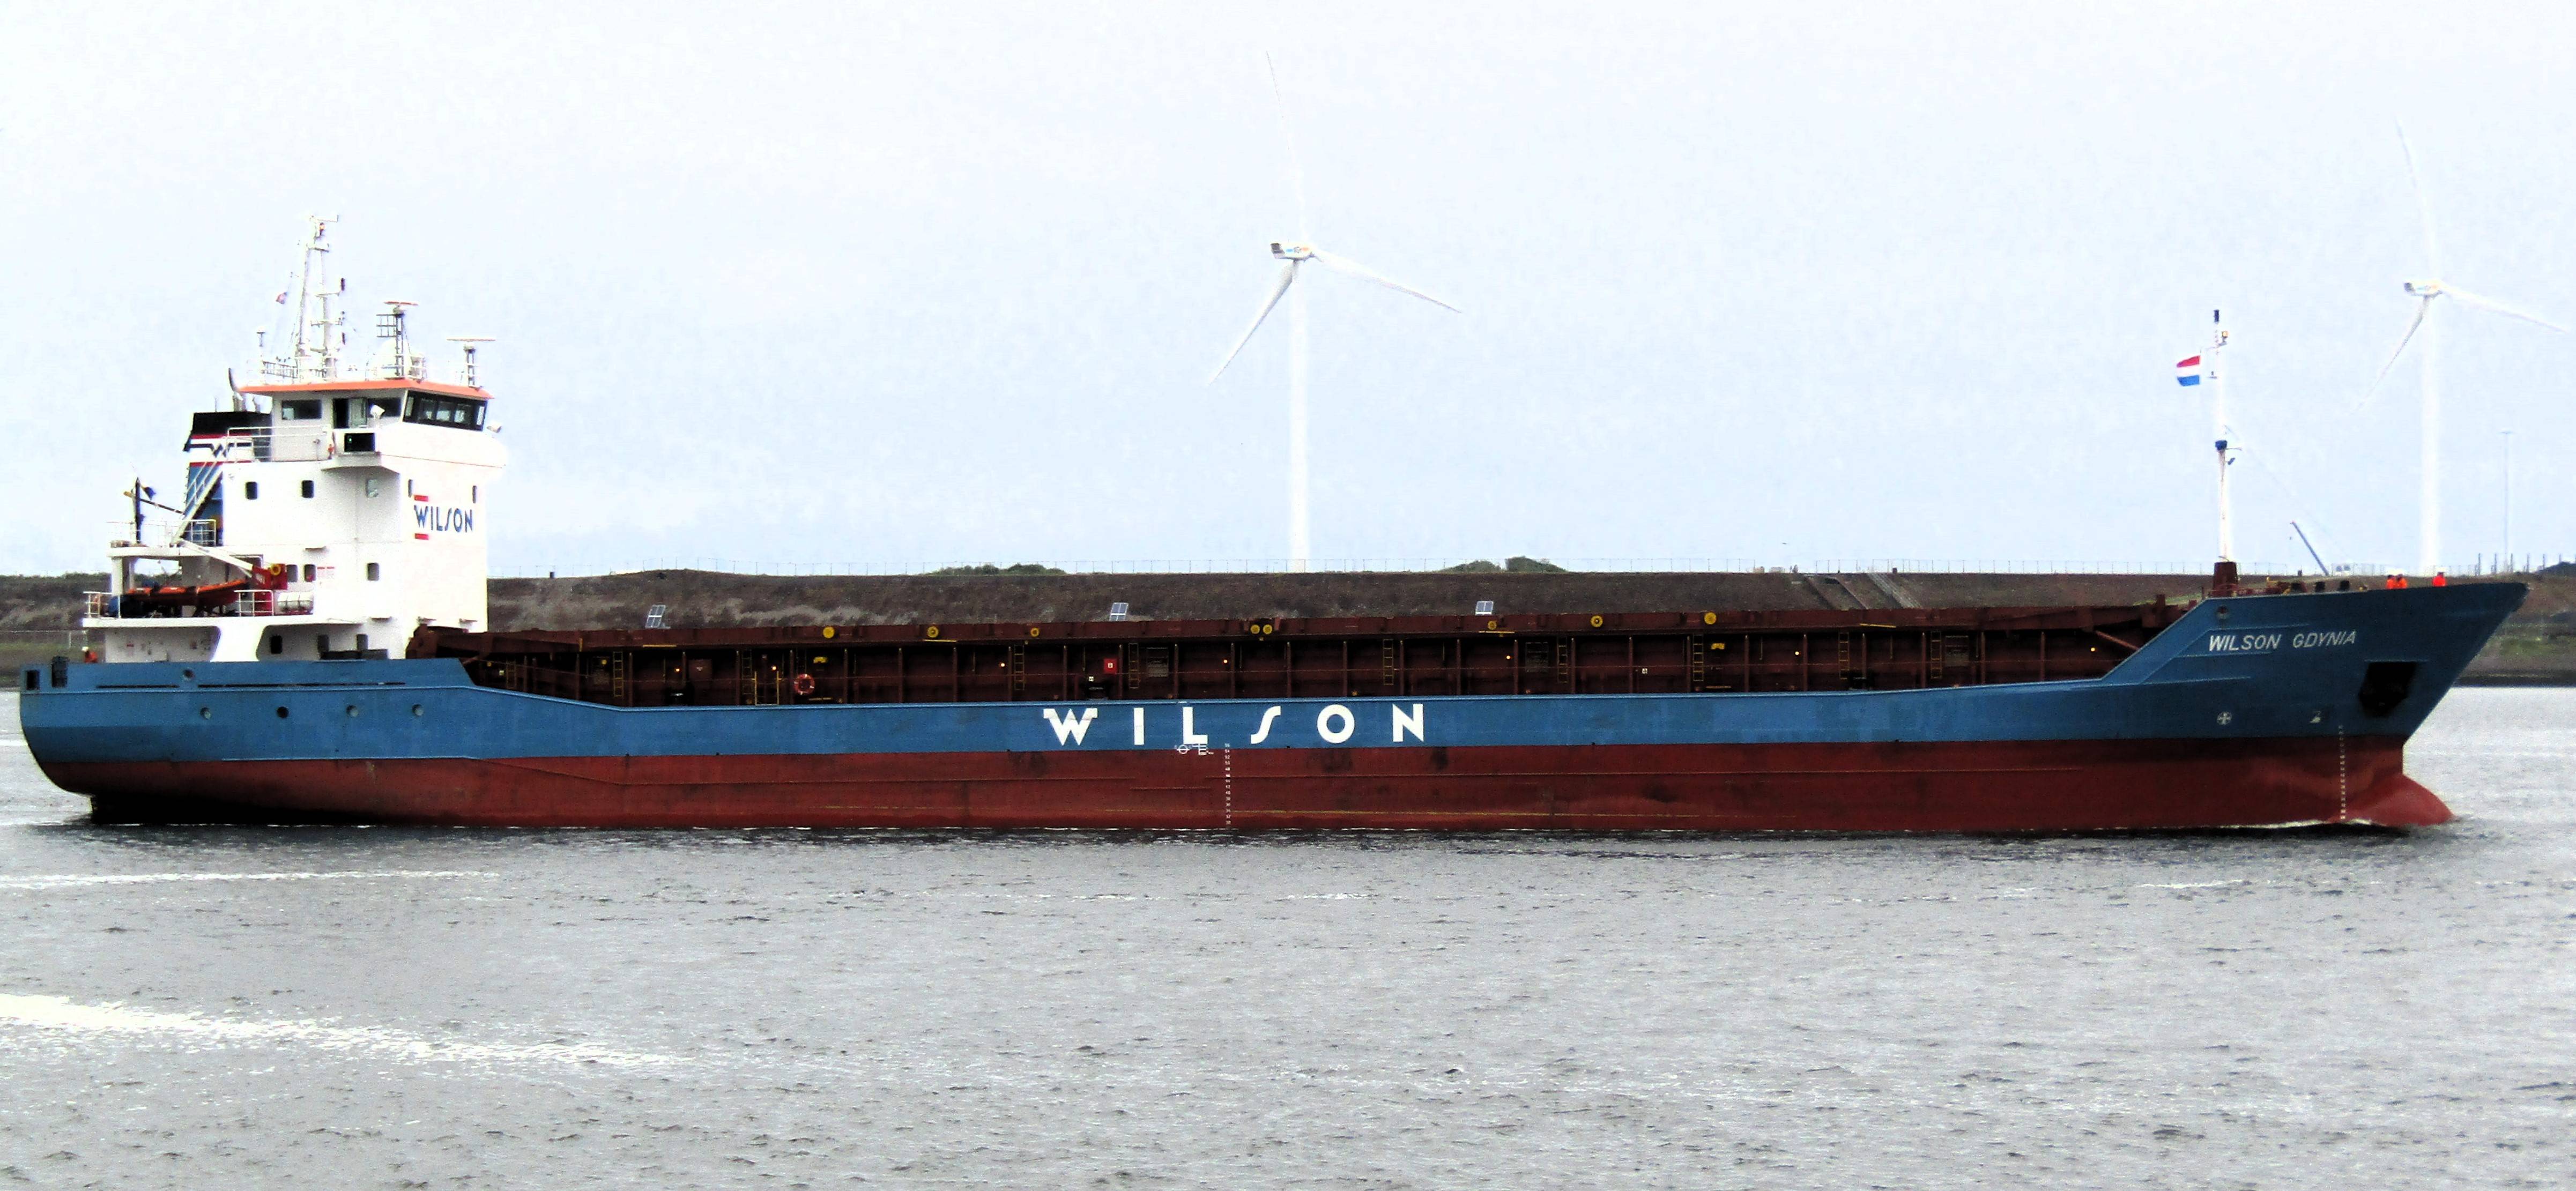 Wilson Gdynia